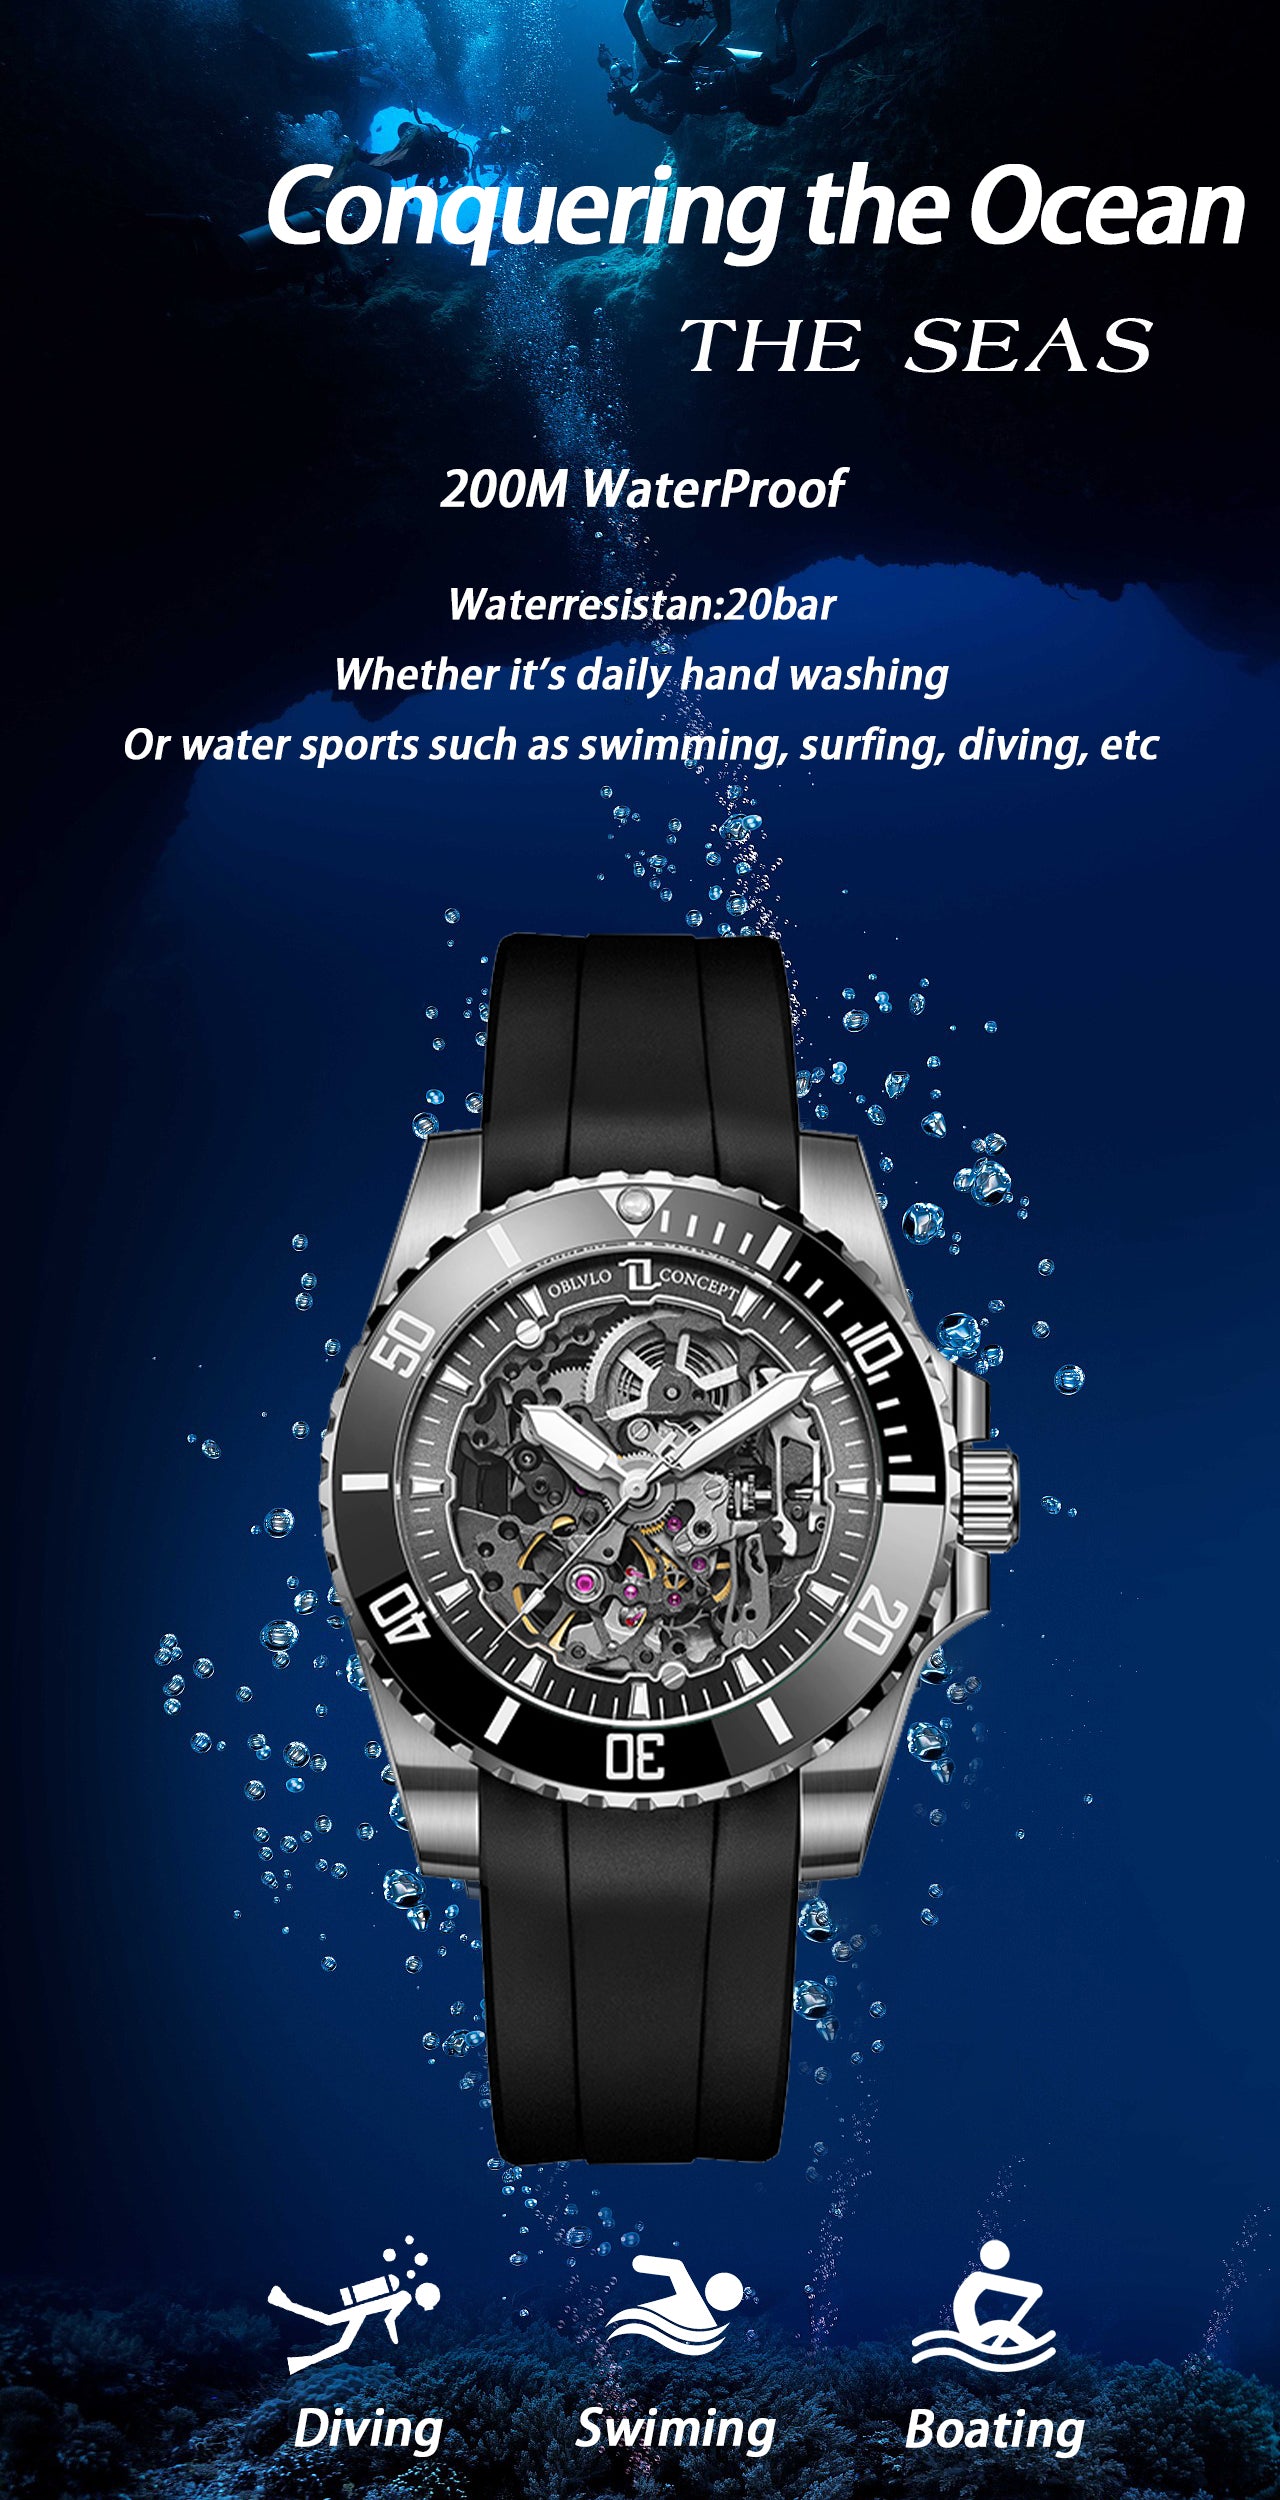 Best Oblvlo Design DM-S Luxury Automatic Skeleton Dive Watch